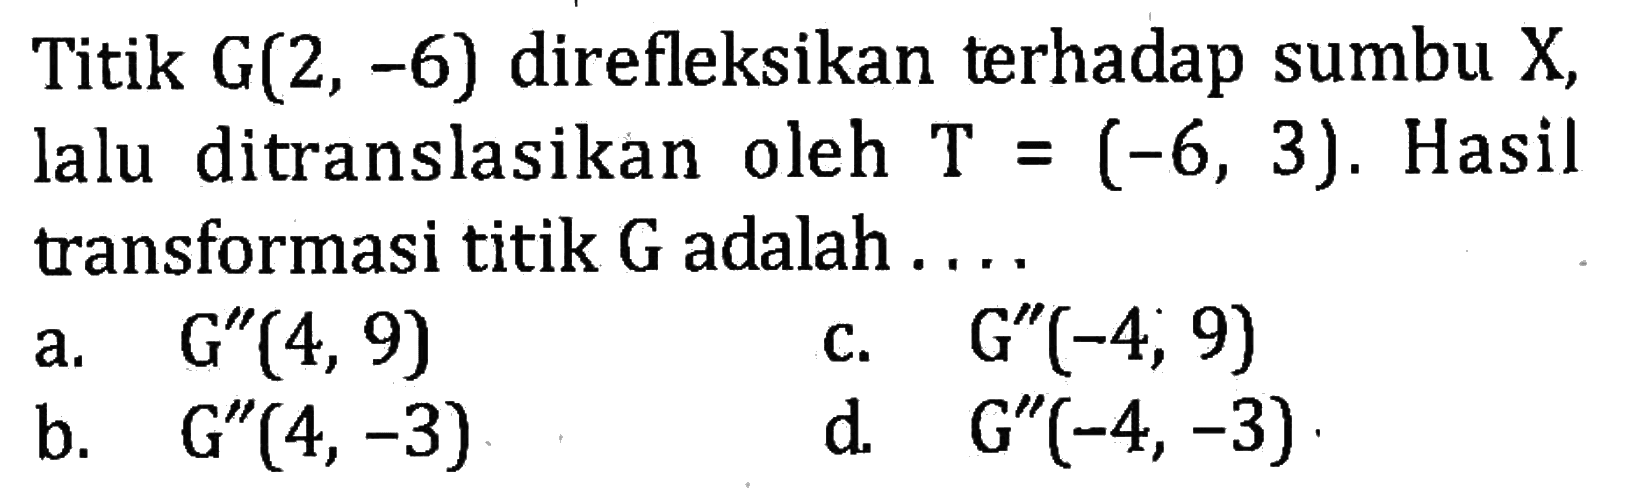 Titik G(2,-6) direfleksikan terhadap sumbu X, lalu ditranslasikan oleh T=(-6,3). Hasil transformasi titik G adalah ... a. G''(4,9) b. G''(4,-3) c. G''(-4,9) d. G''(-4,-3) 